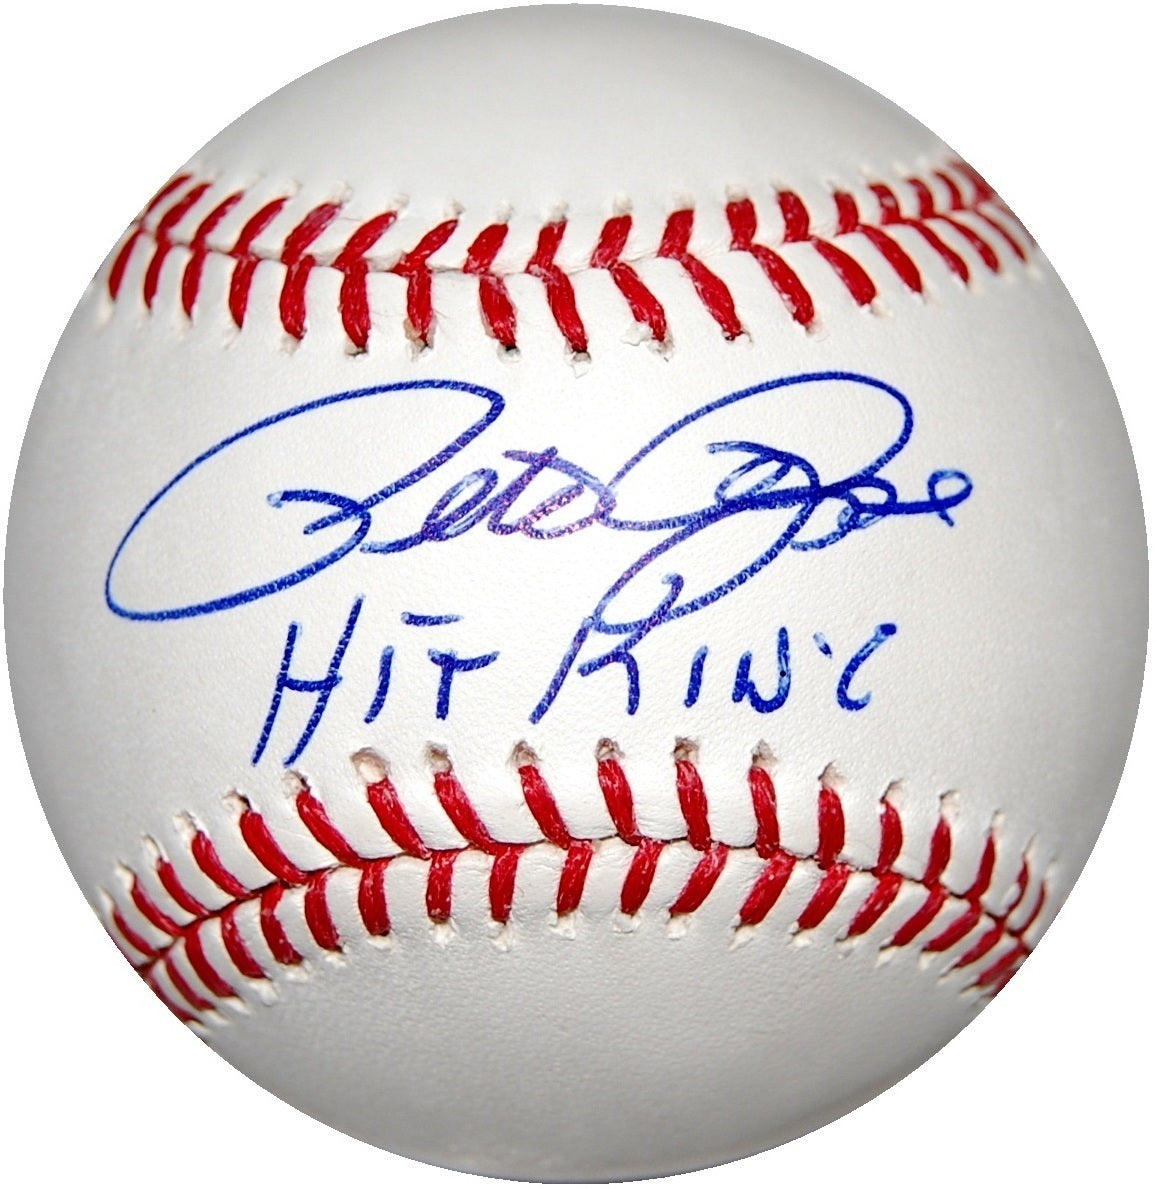 1980 Pete Rose Signed & Inscribed (4256) Philadelphia Phillies